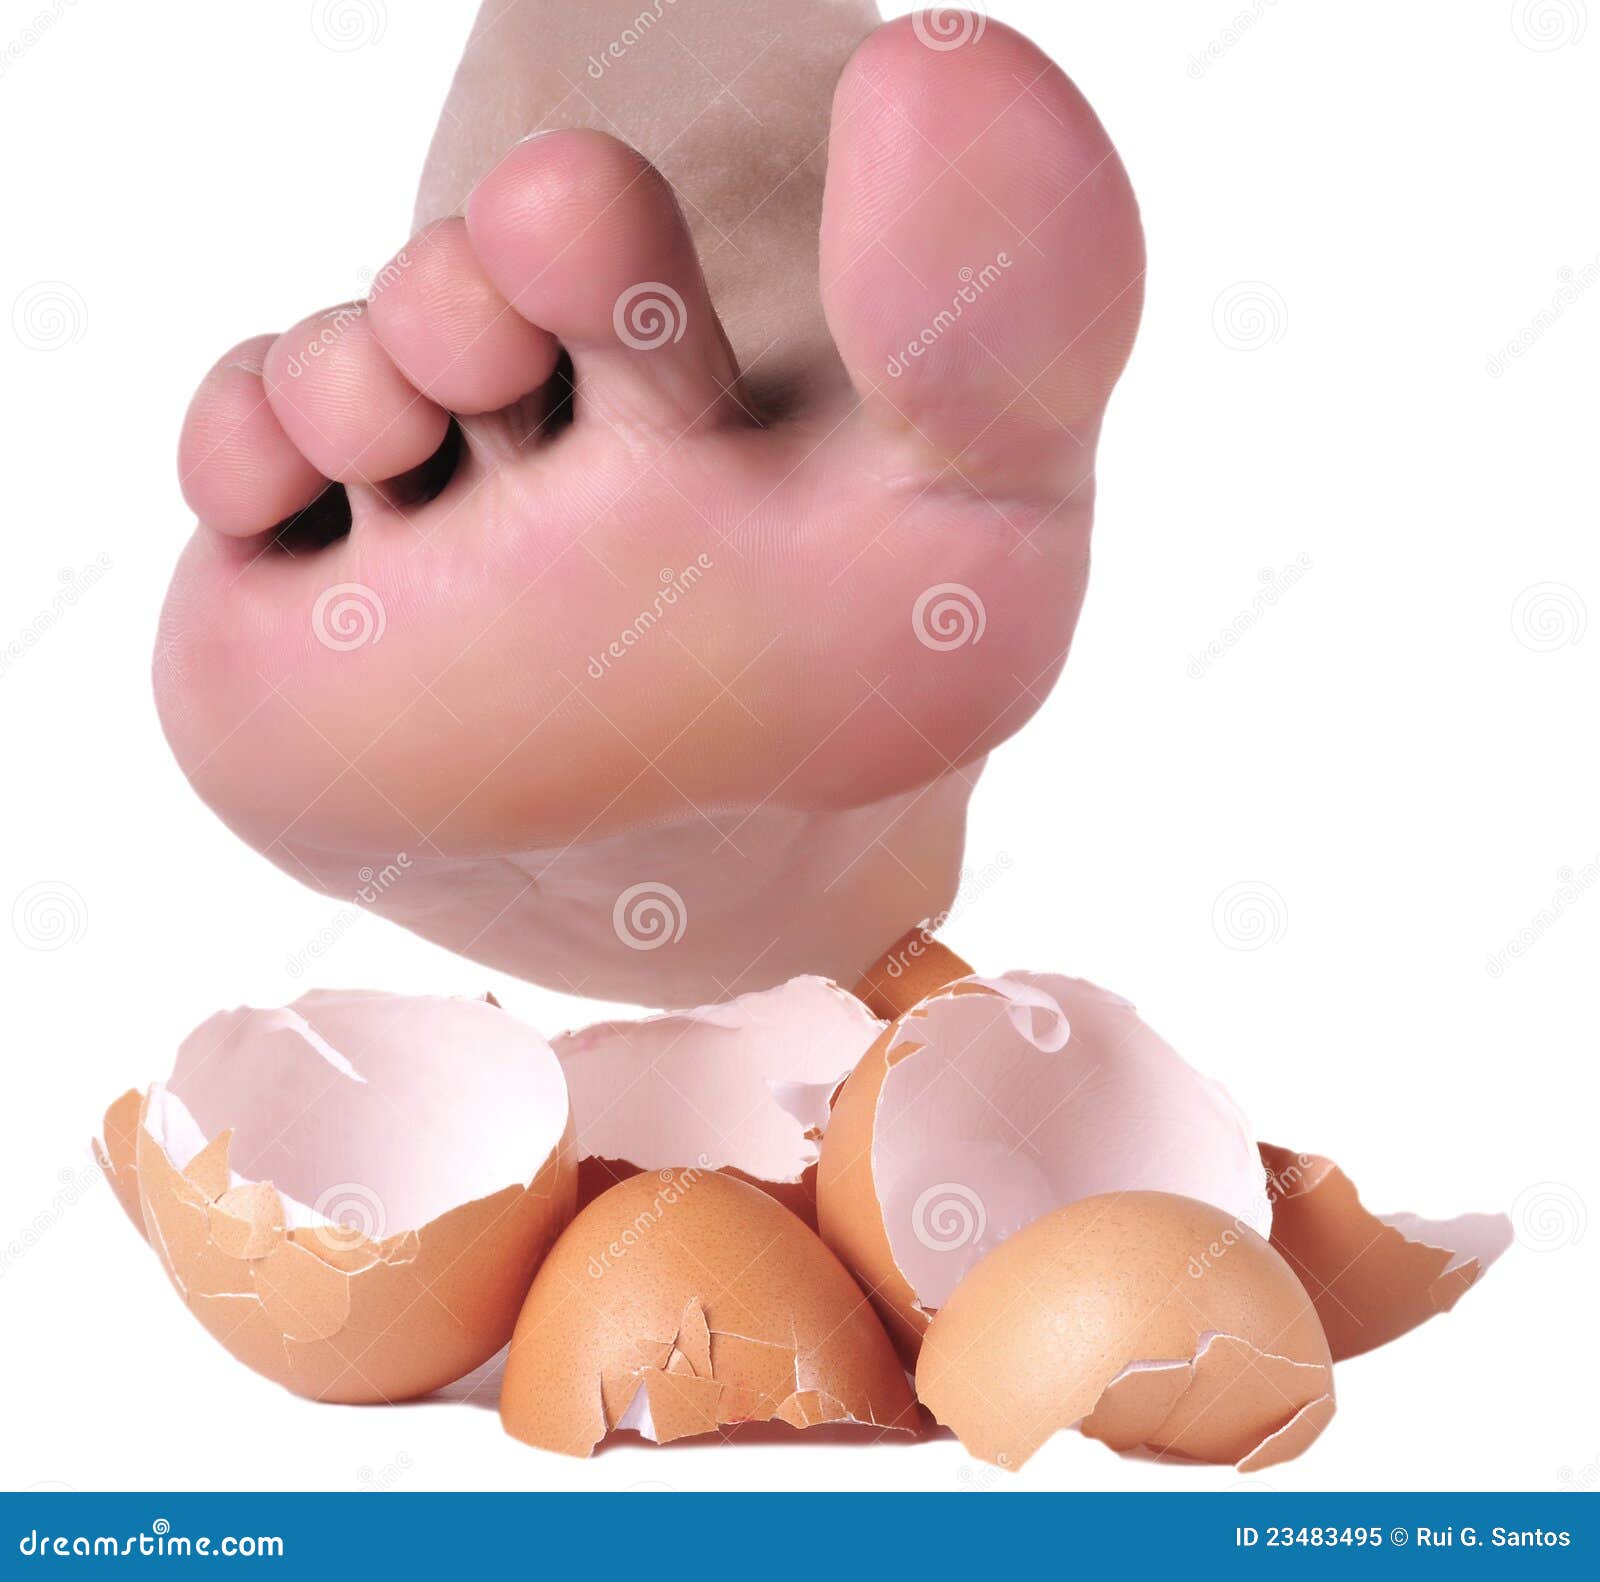 walking on eggshells